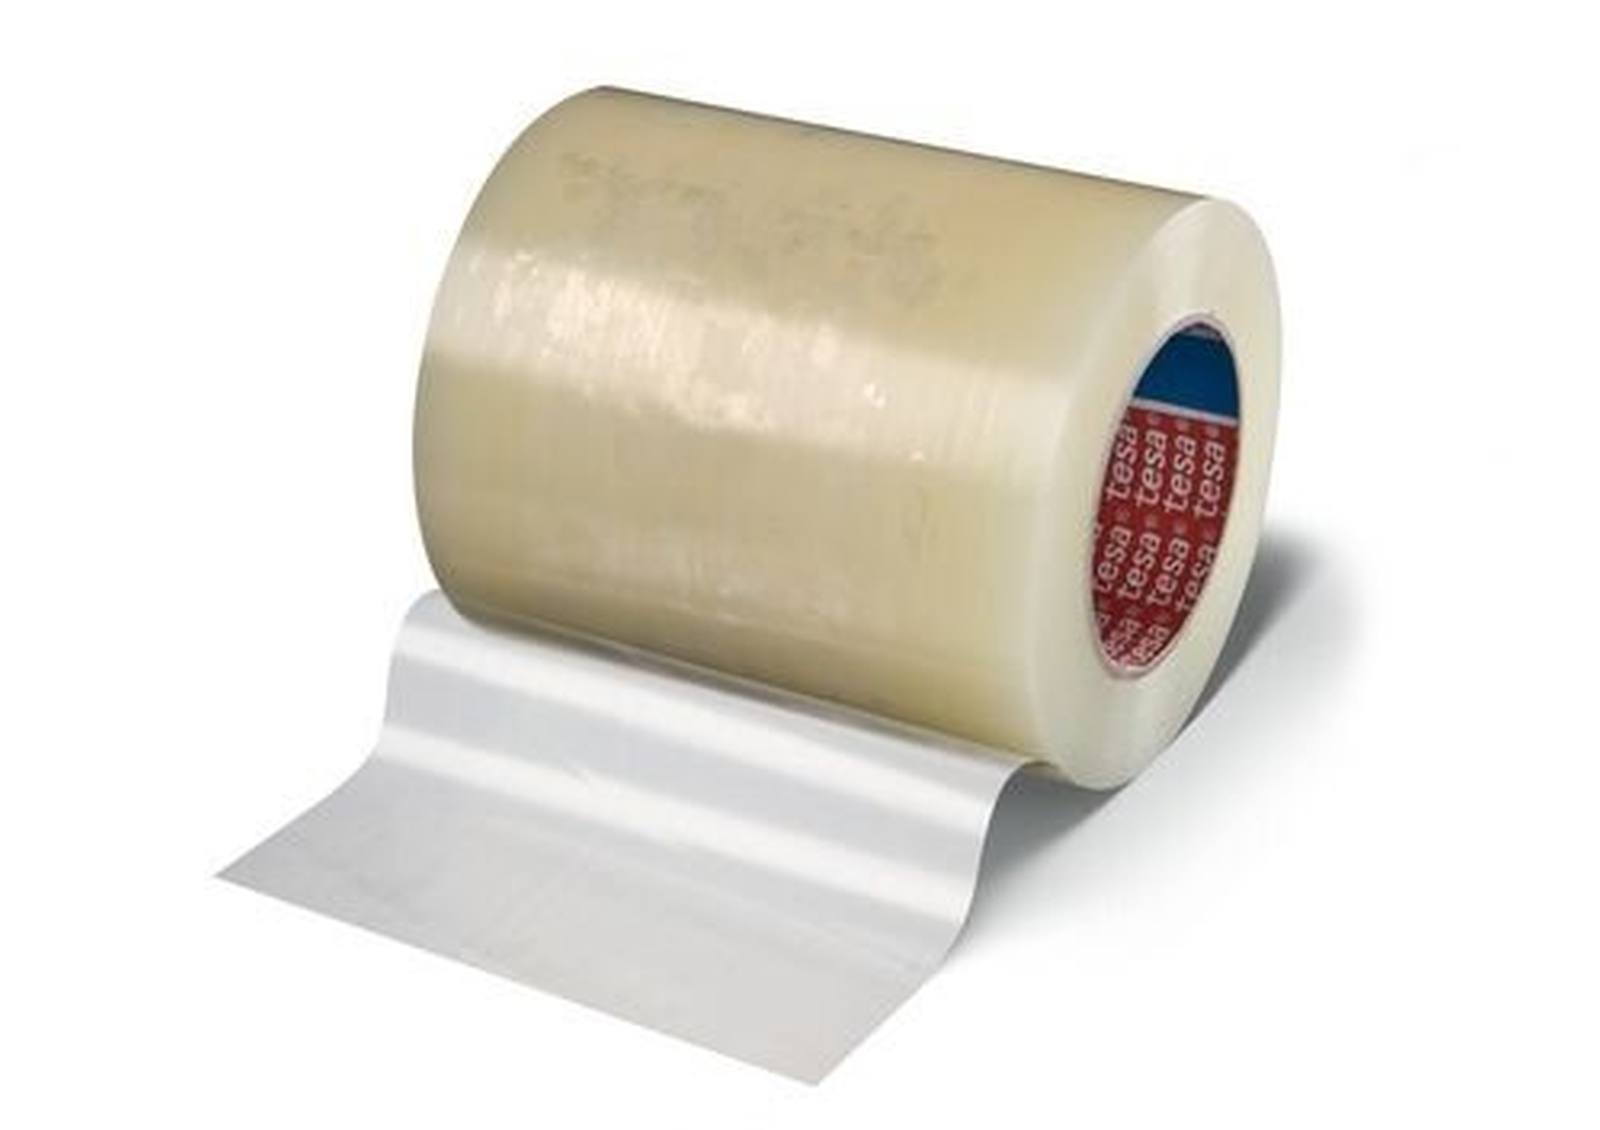 Tesa 4651 ® fabric adhesive tape - merXu - Negotiate prices! Wholesale  purchases!